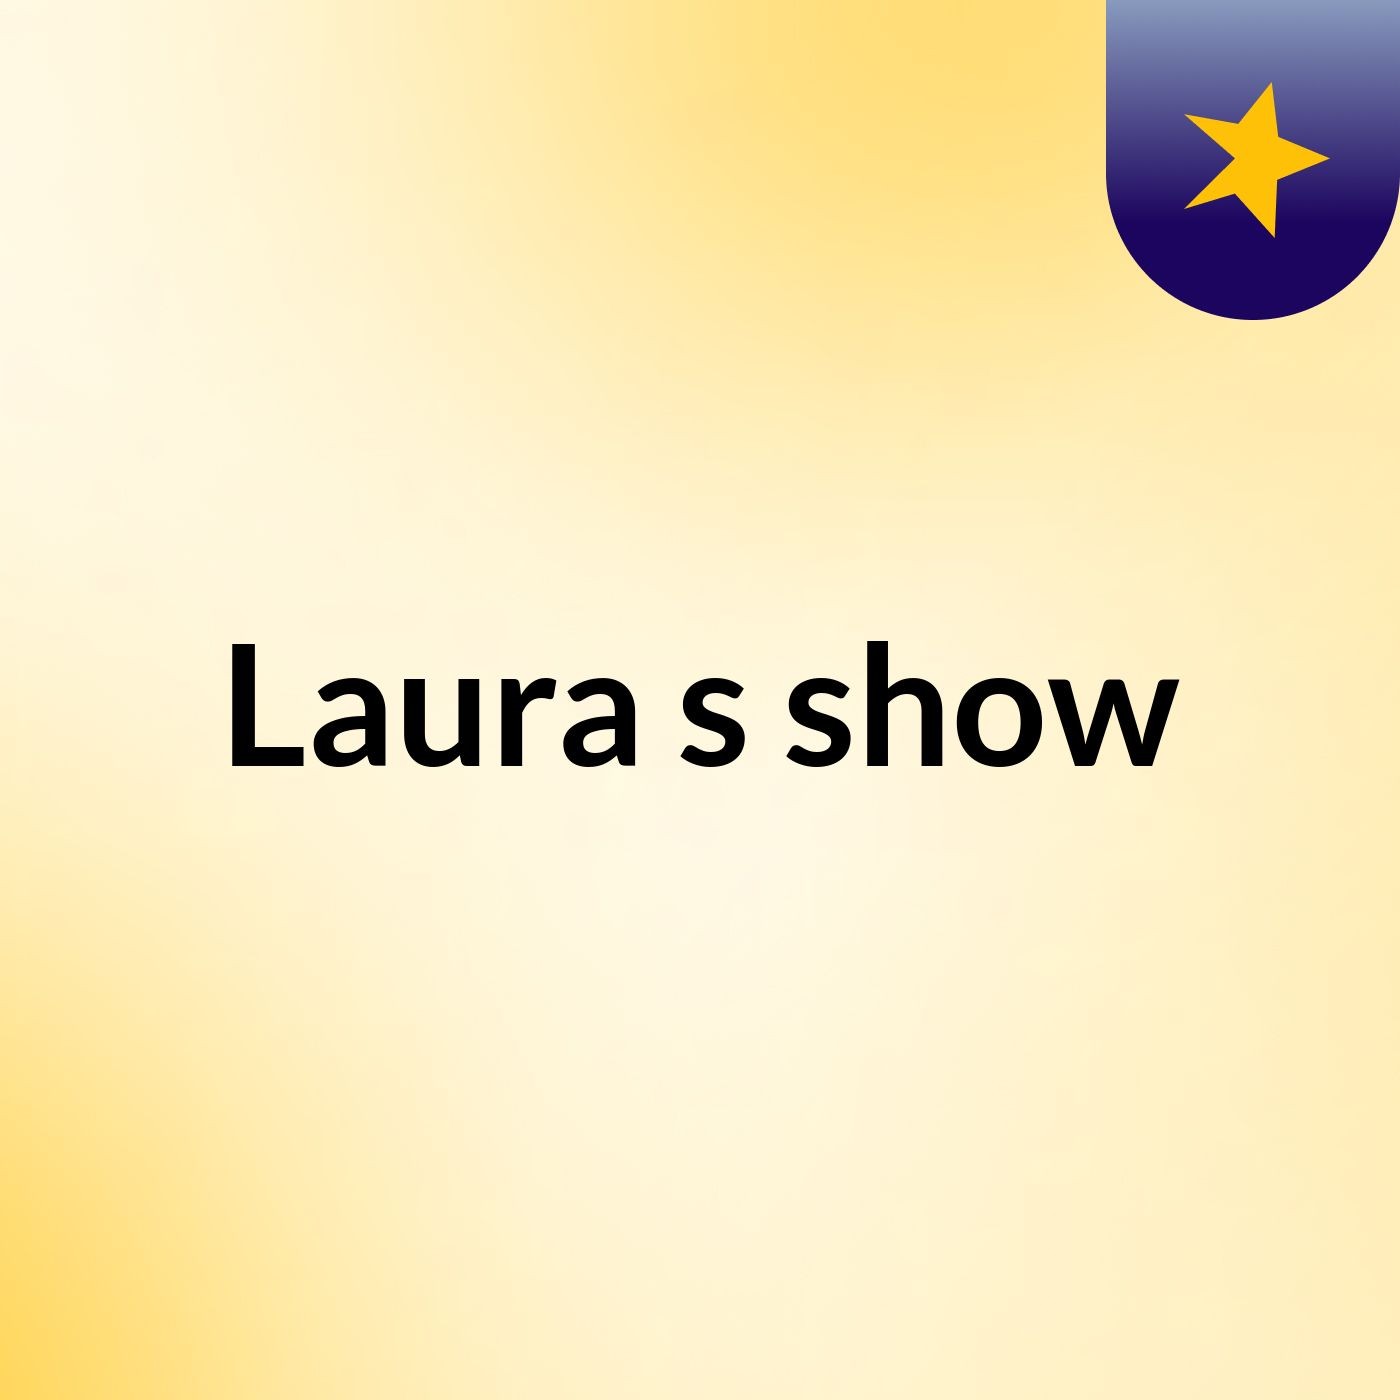 Laura's show